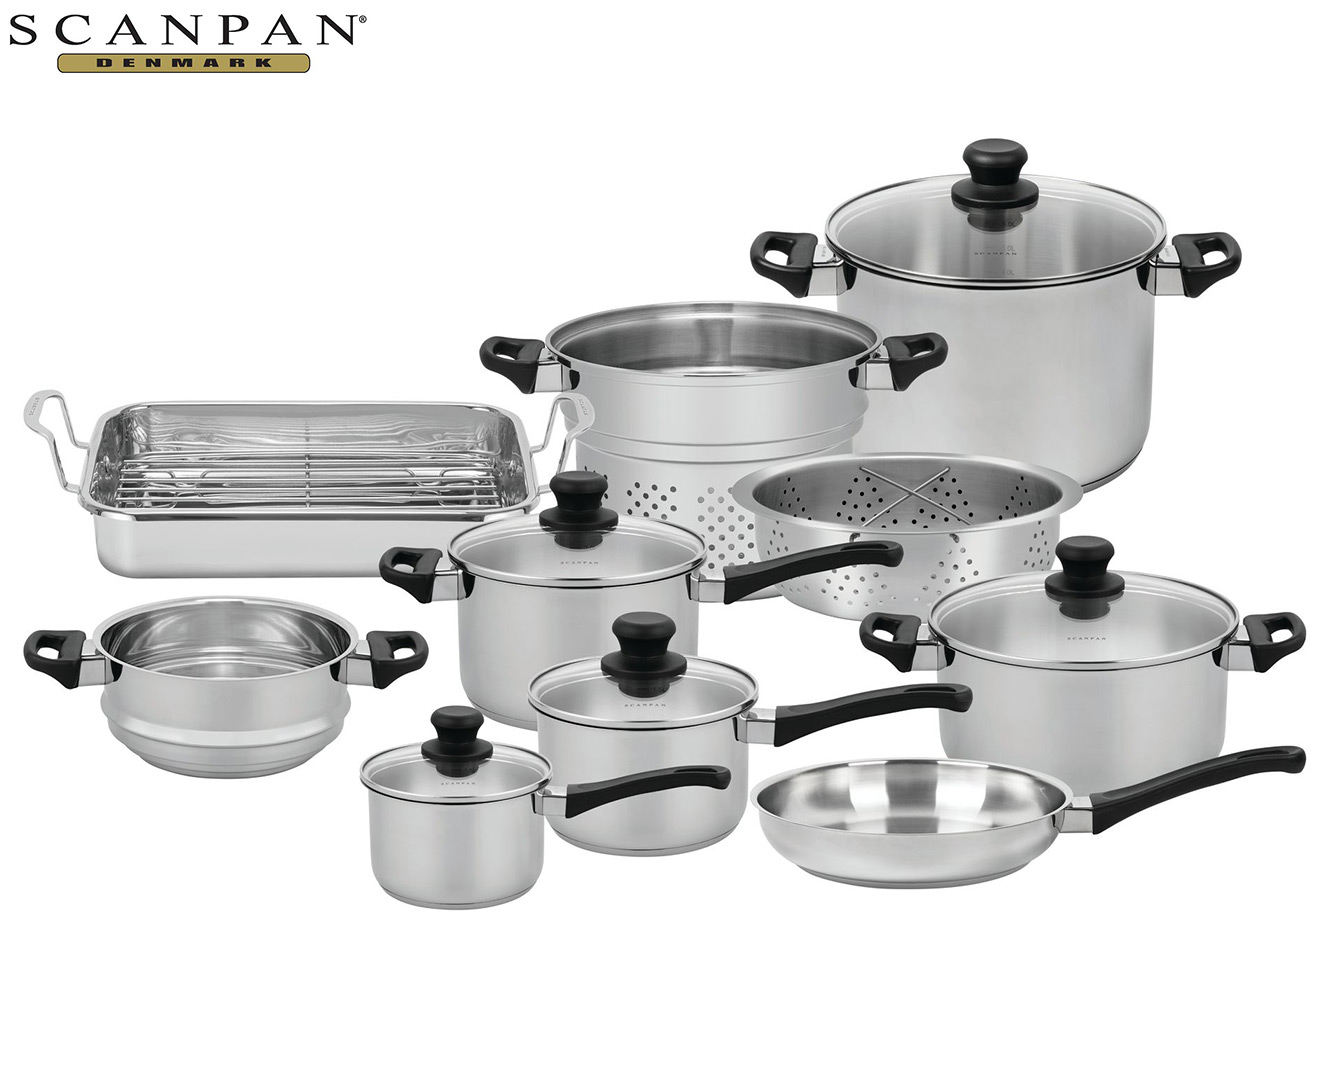 scanpan cookware set